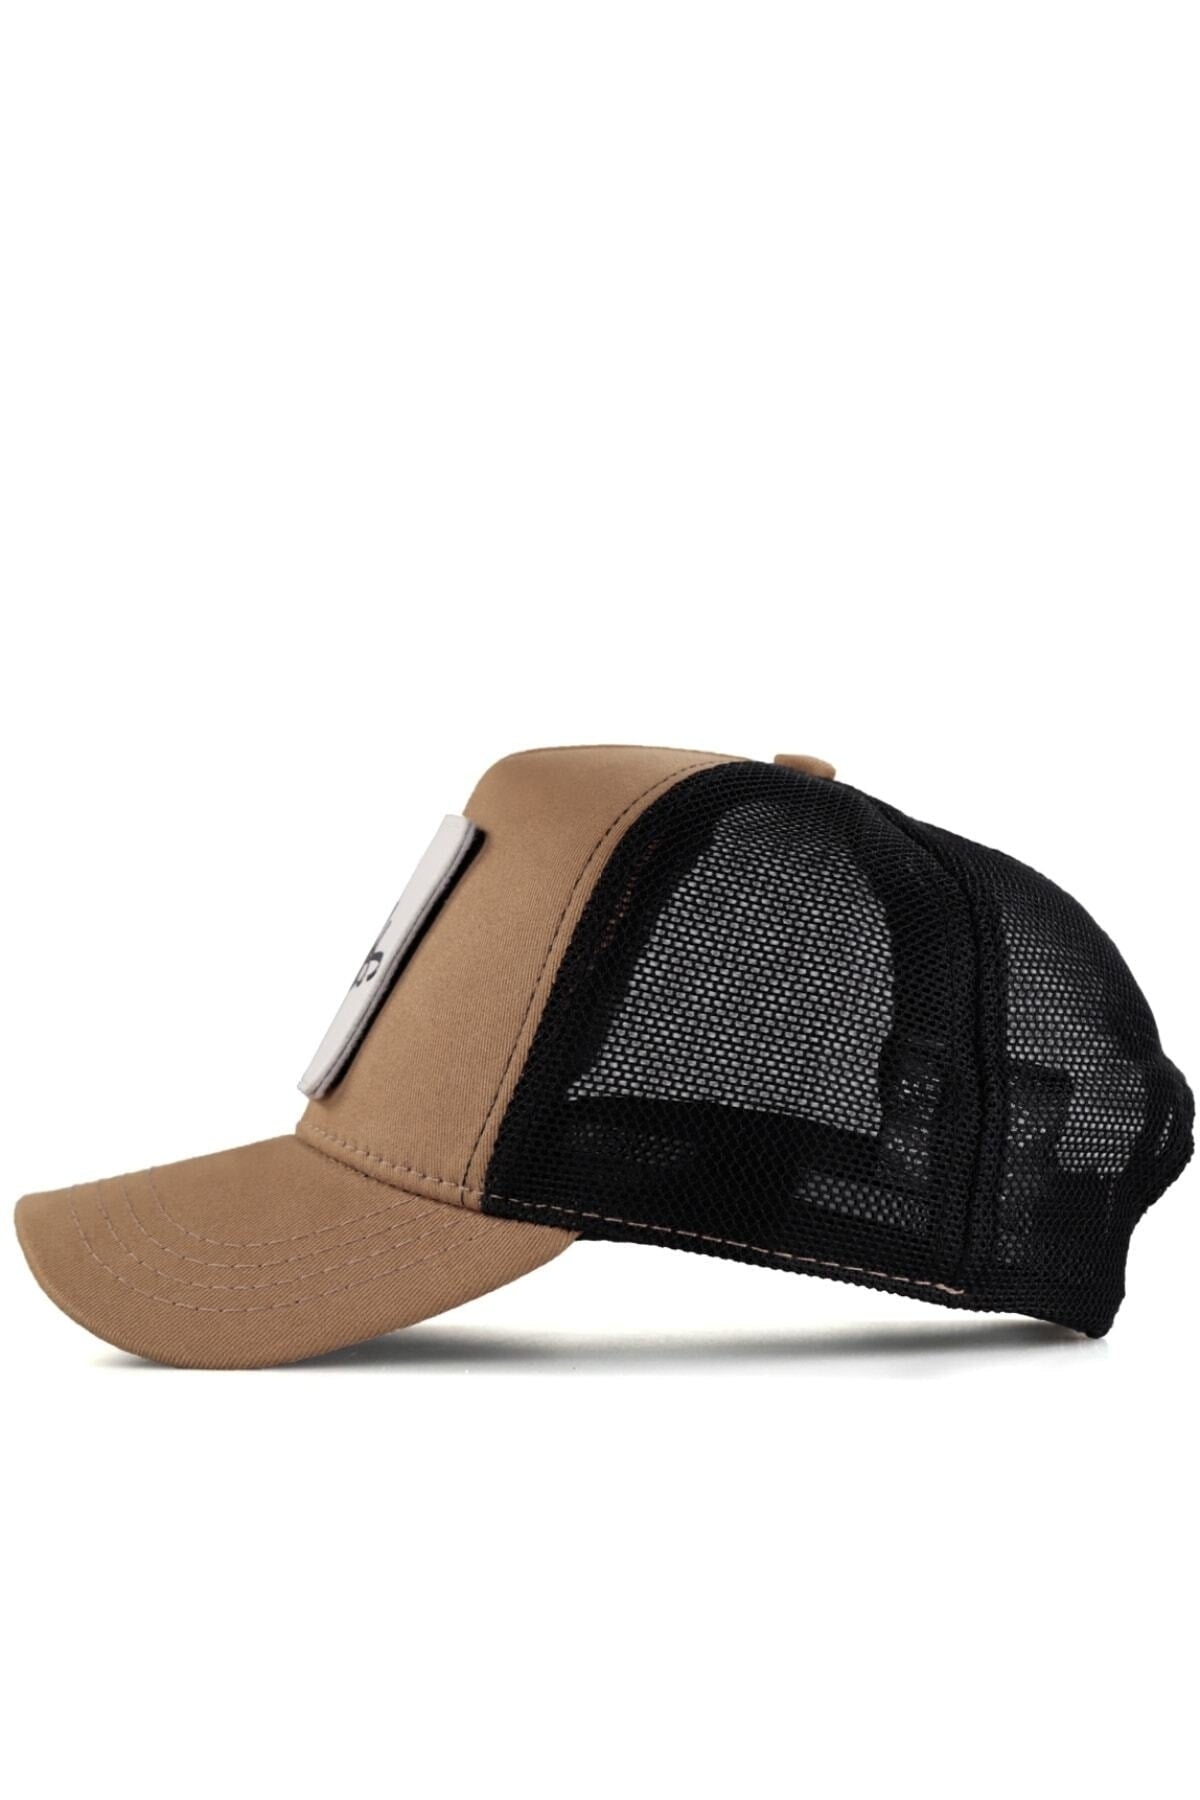 V1 Trucker Duckside - Unisex Mink-Black Hat (Cap) with 11 Code Logo